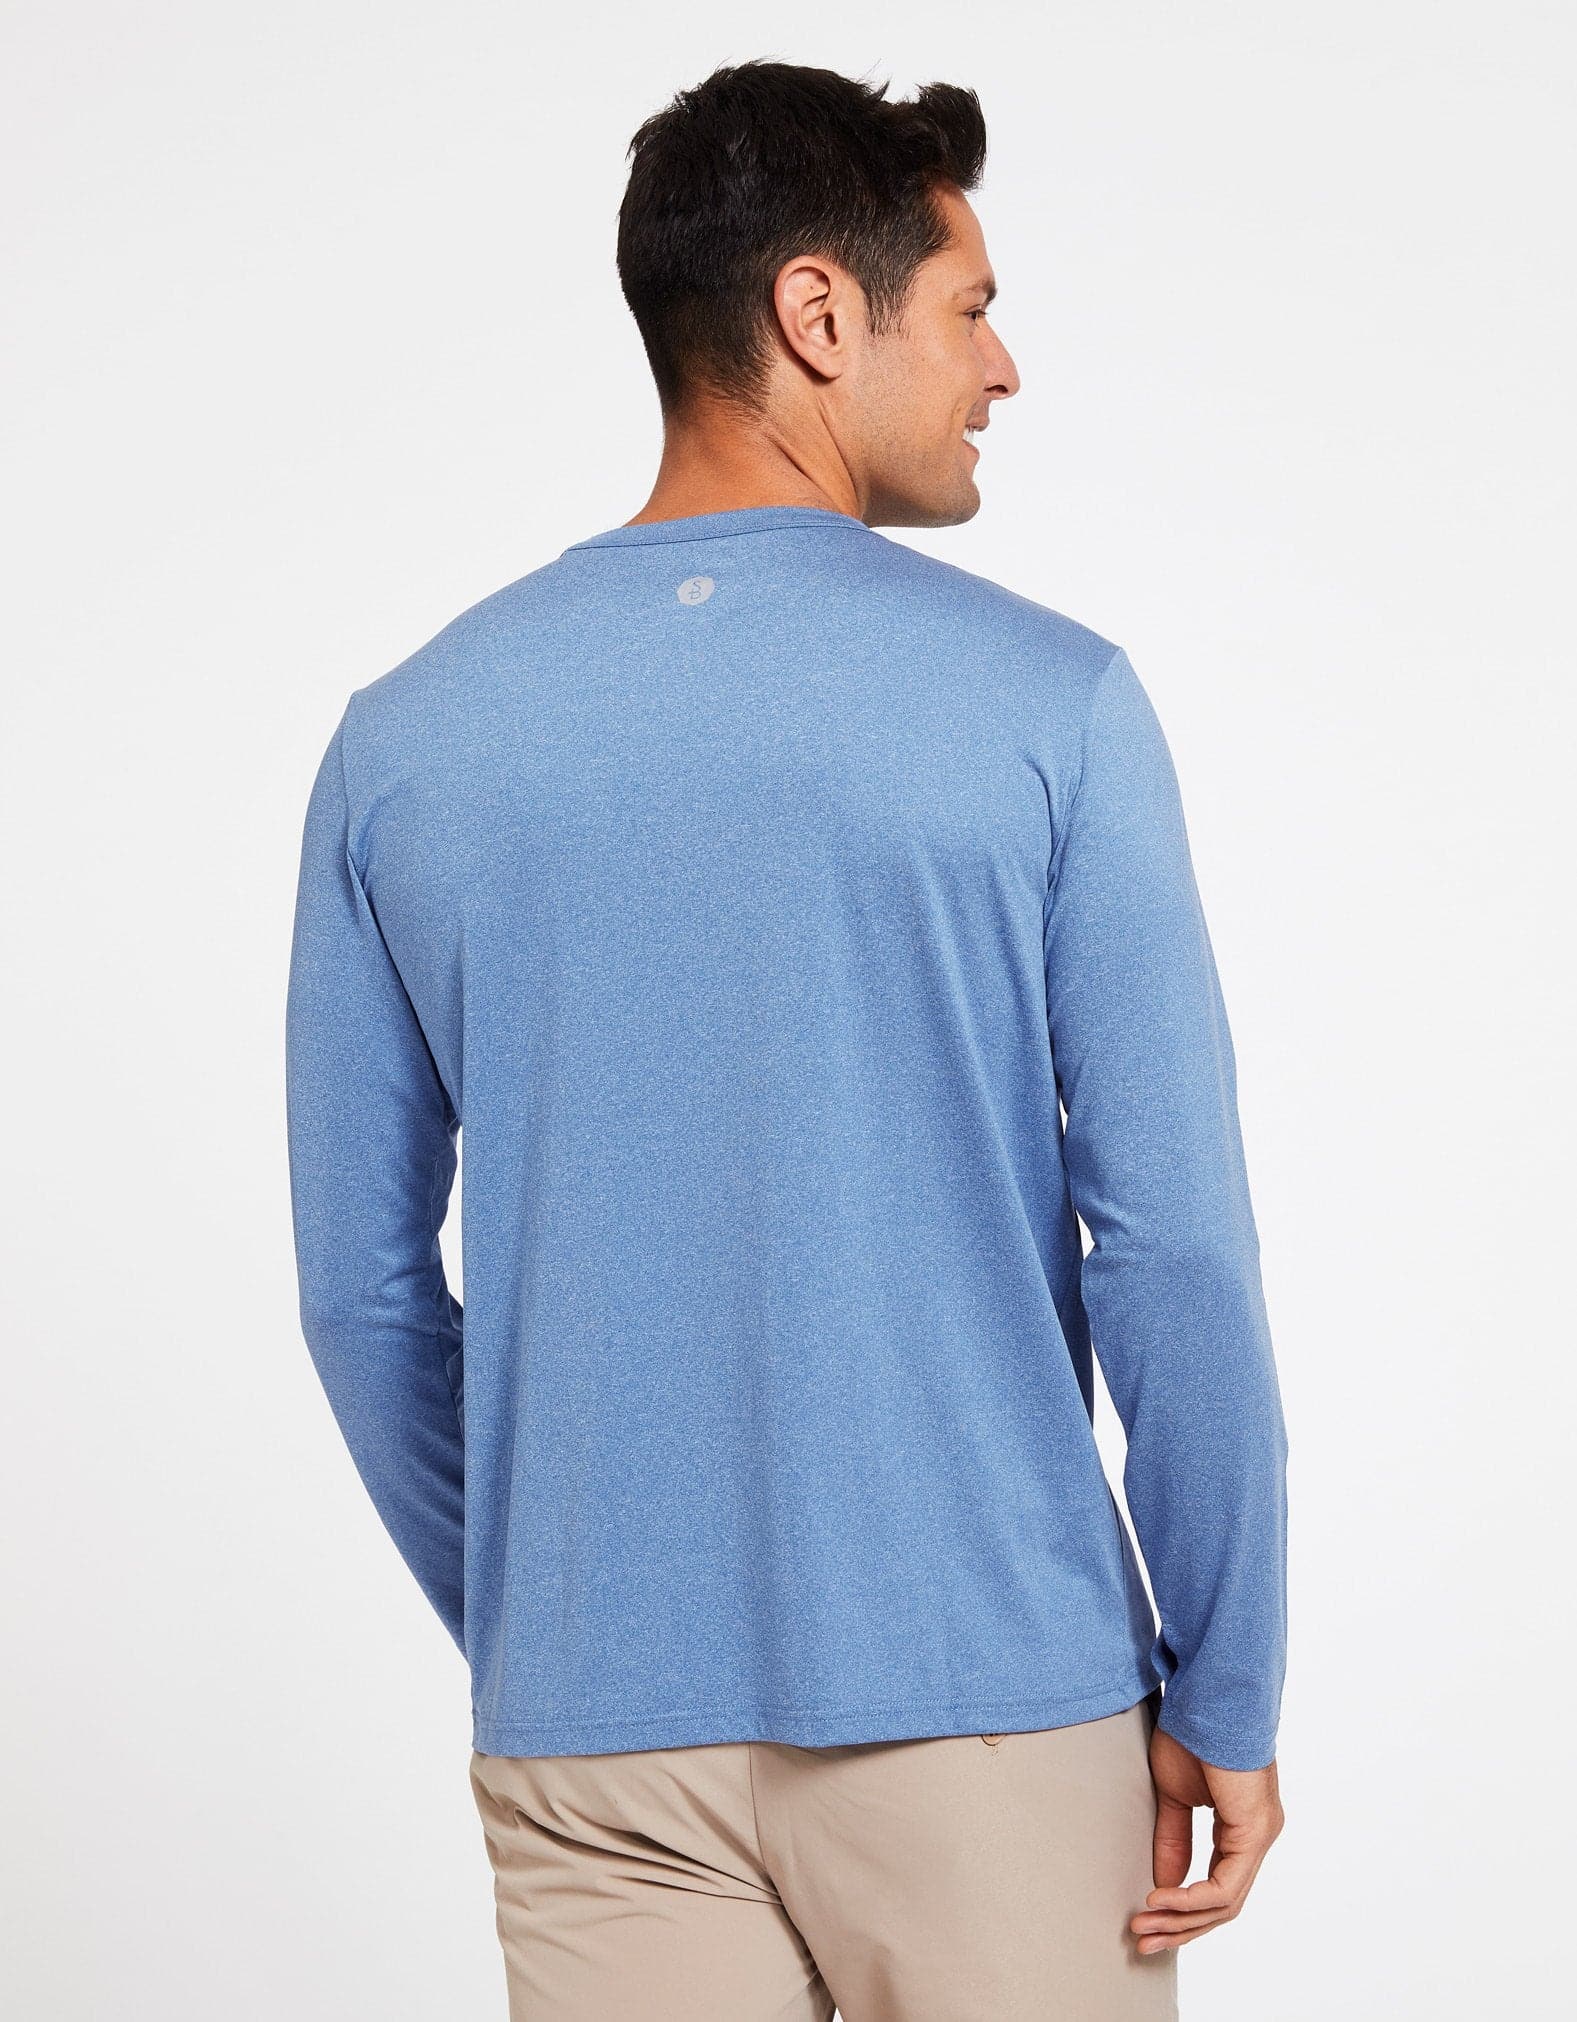 Sun Protective Long Sleeve T-Shirt Upf50+ For Men | UV Protection White